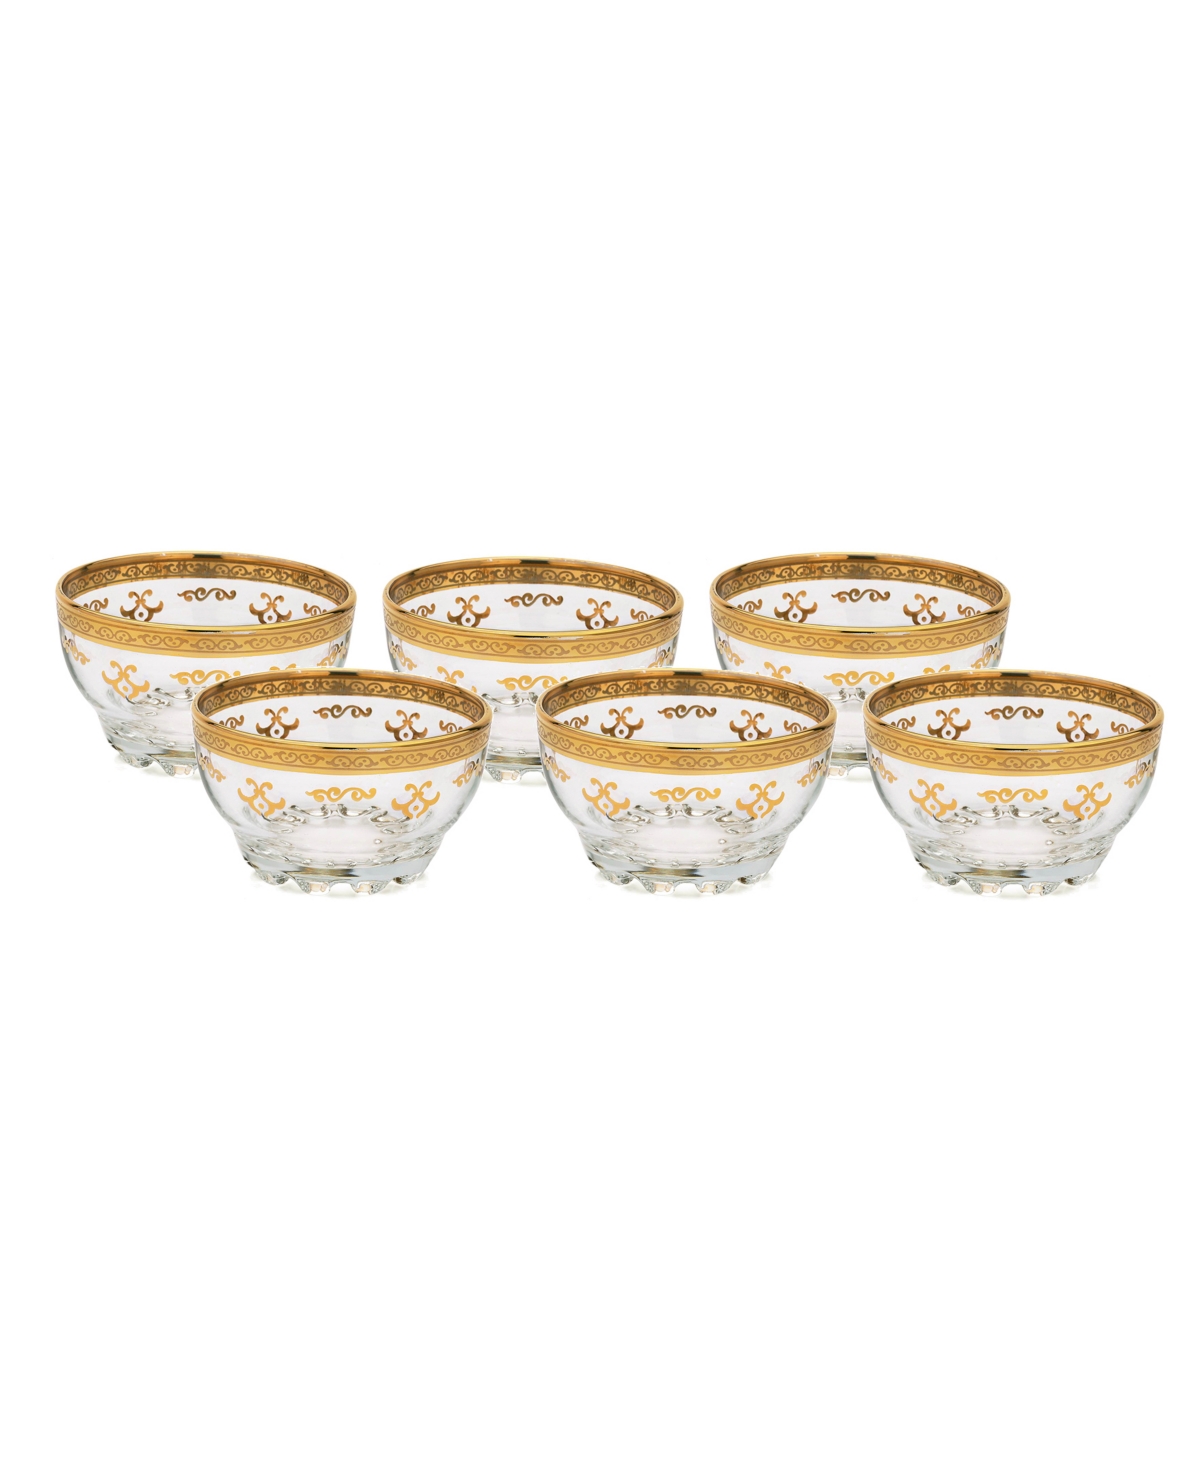 Set of 6 Dessert Bowls with Rich Design - Gold